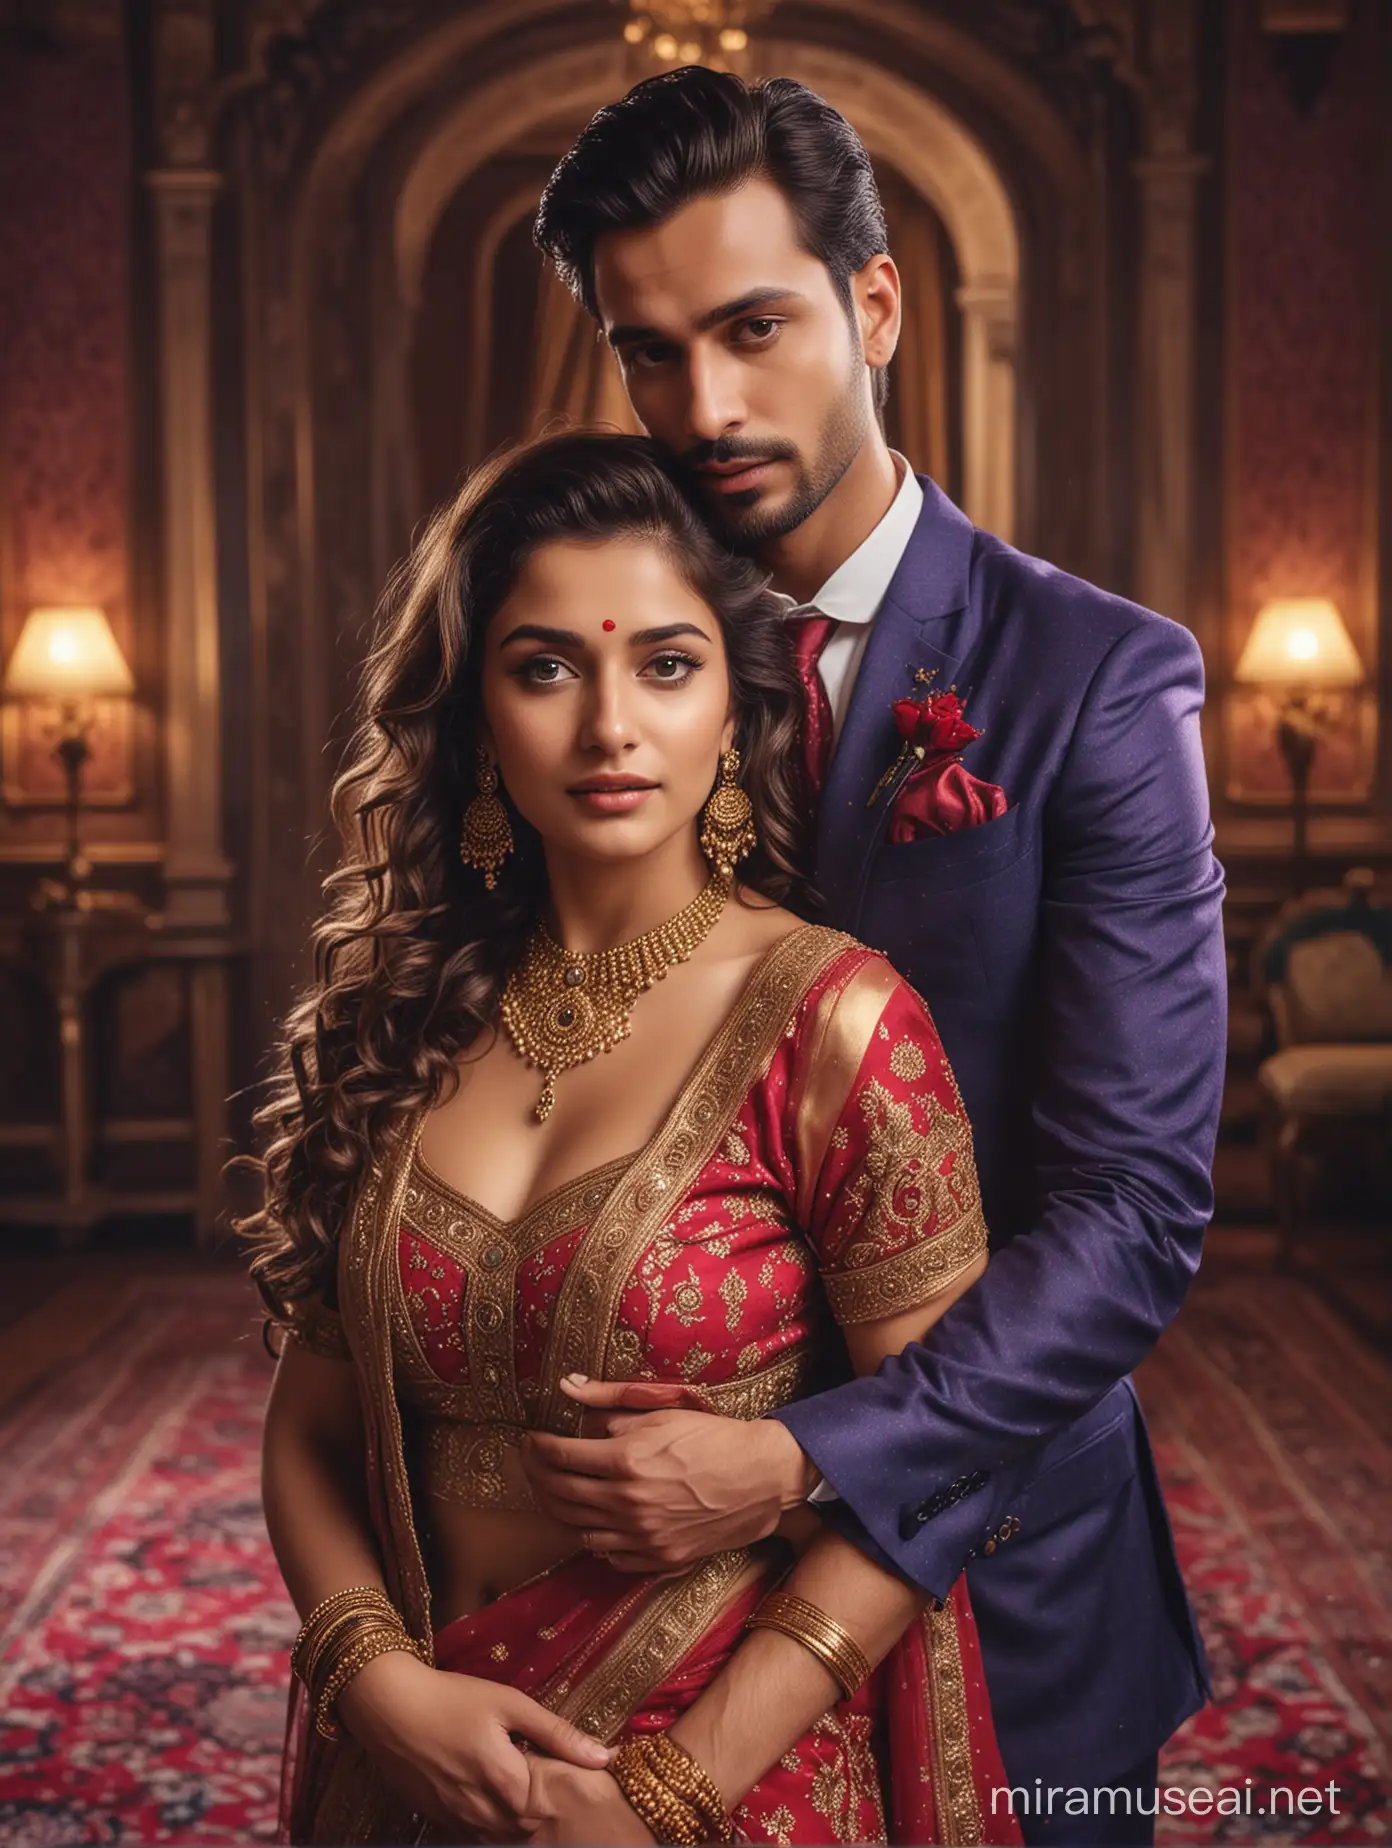 Romantic Indian Couple Embracing in Vintage Palace Interior Elegant Saree Stylish Suit